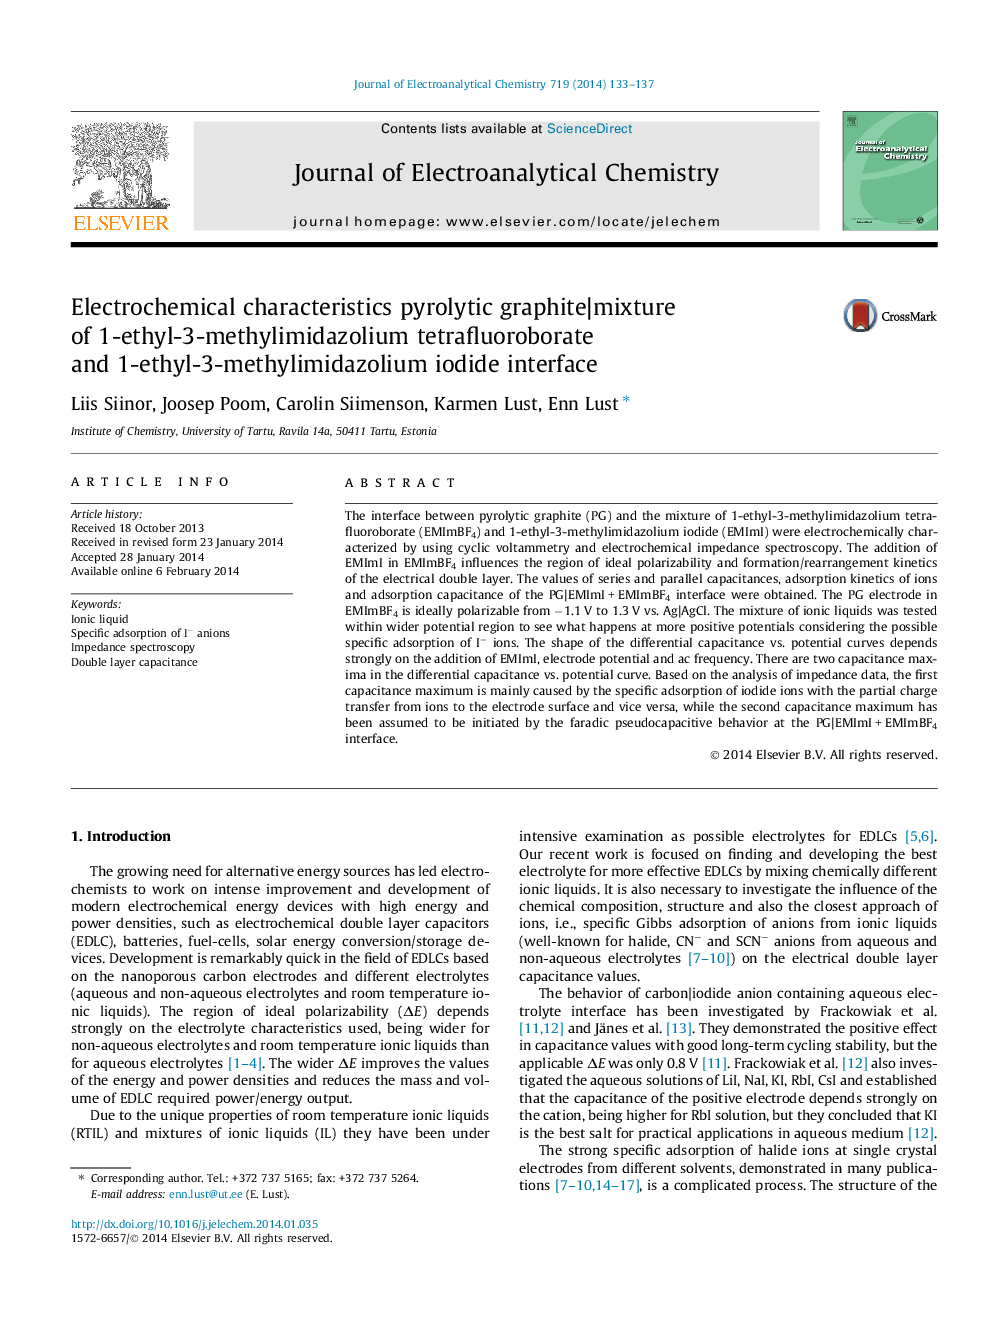 Electrochemical characteristics pyrolytic graphite|mixture of 1-ethyl-3-methylimidazolium tetrafluoroborate and 1-ethyl-3-methylimidazolium iodide interface